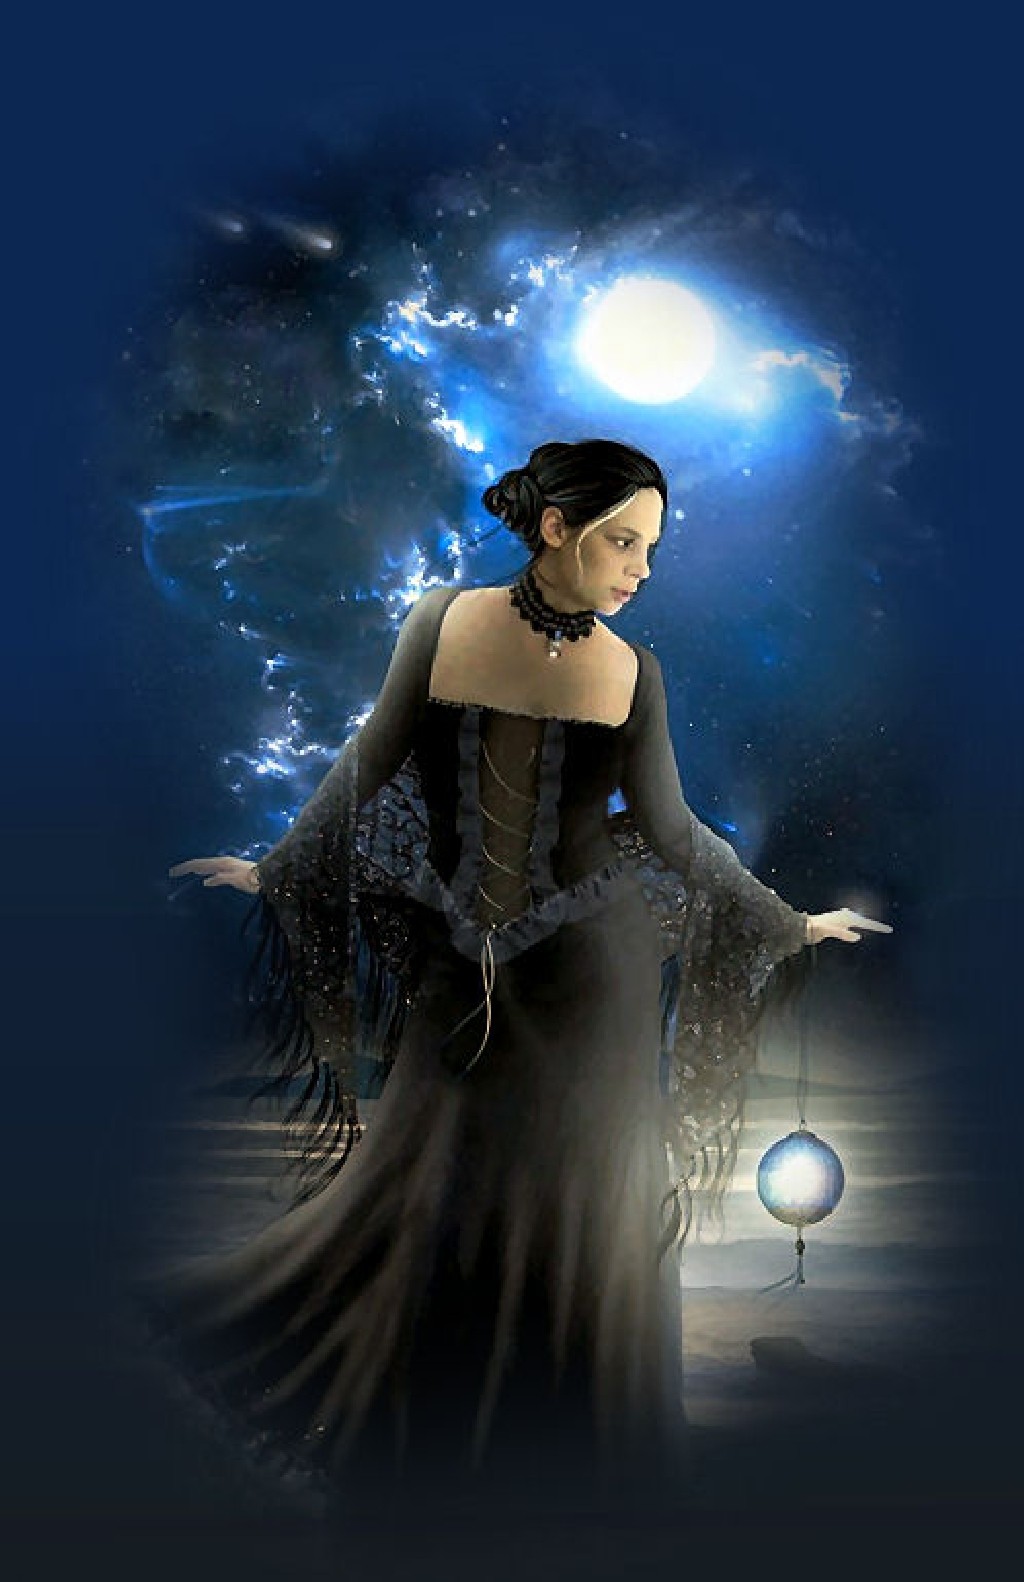 General 1024x1582 Halloween fantasy girl fantasy art women Moon dress dark hair choker black dress blue background standing looking away